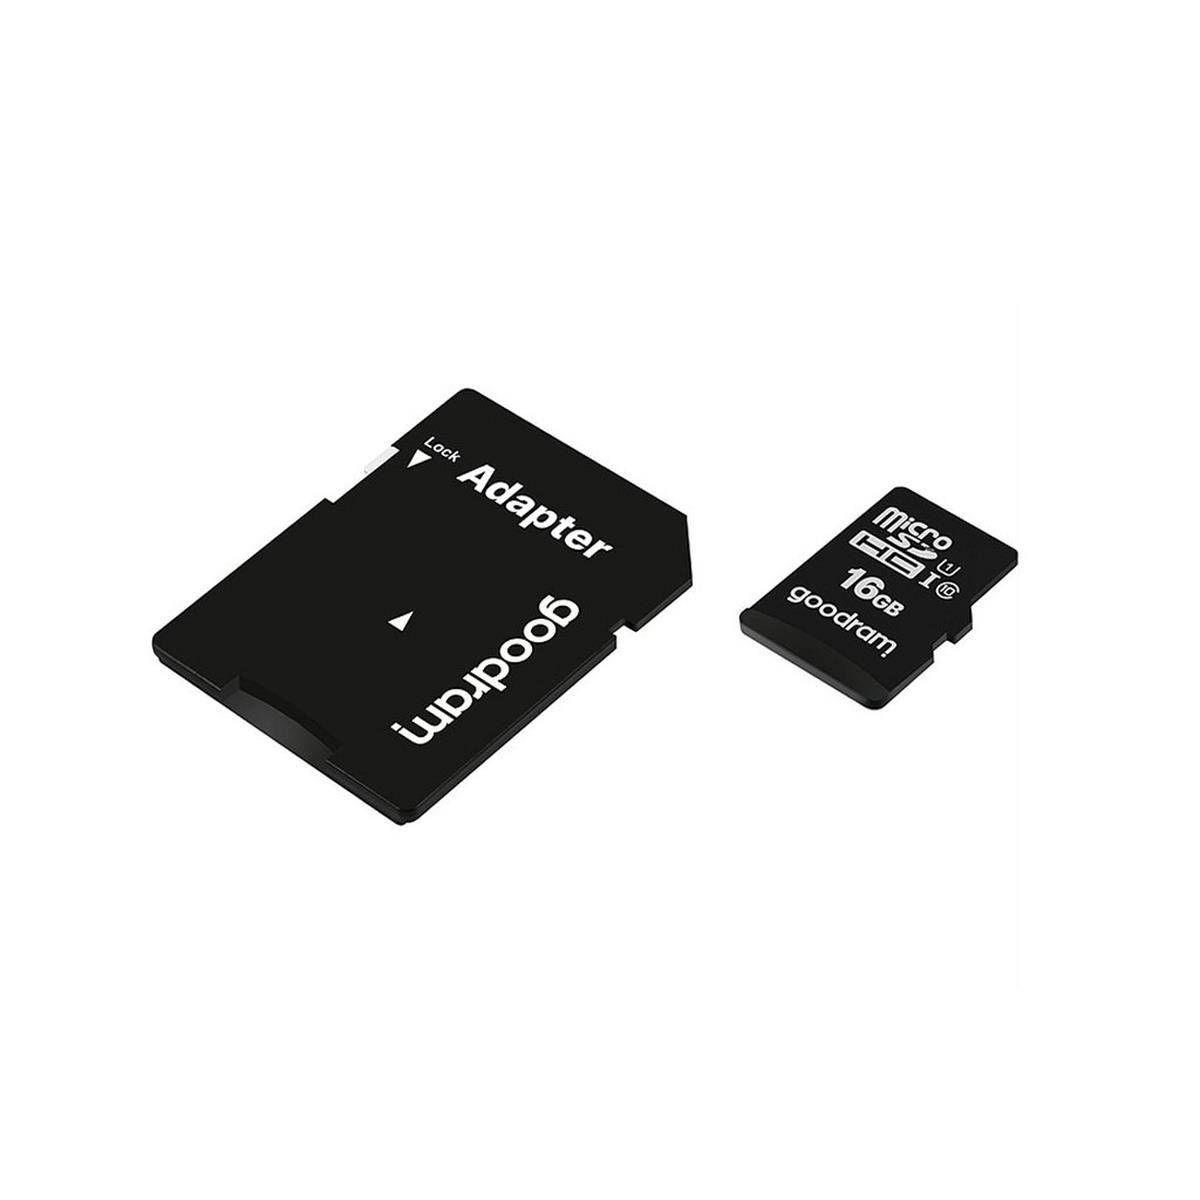 GOODRAM Karta pamięci Microi SD 16GB + Adapter